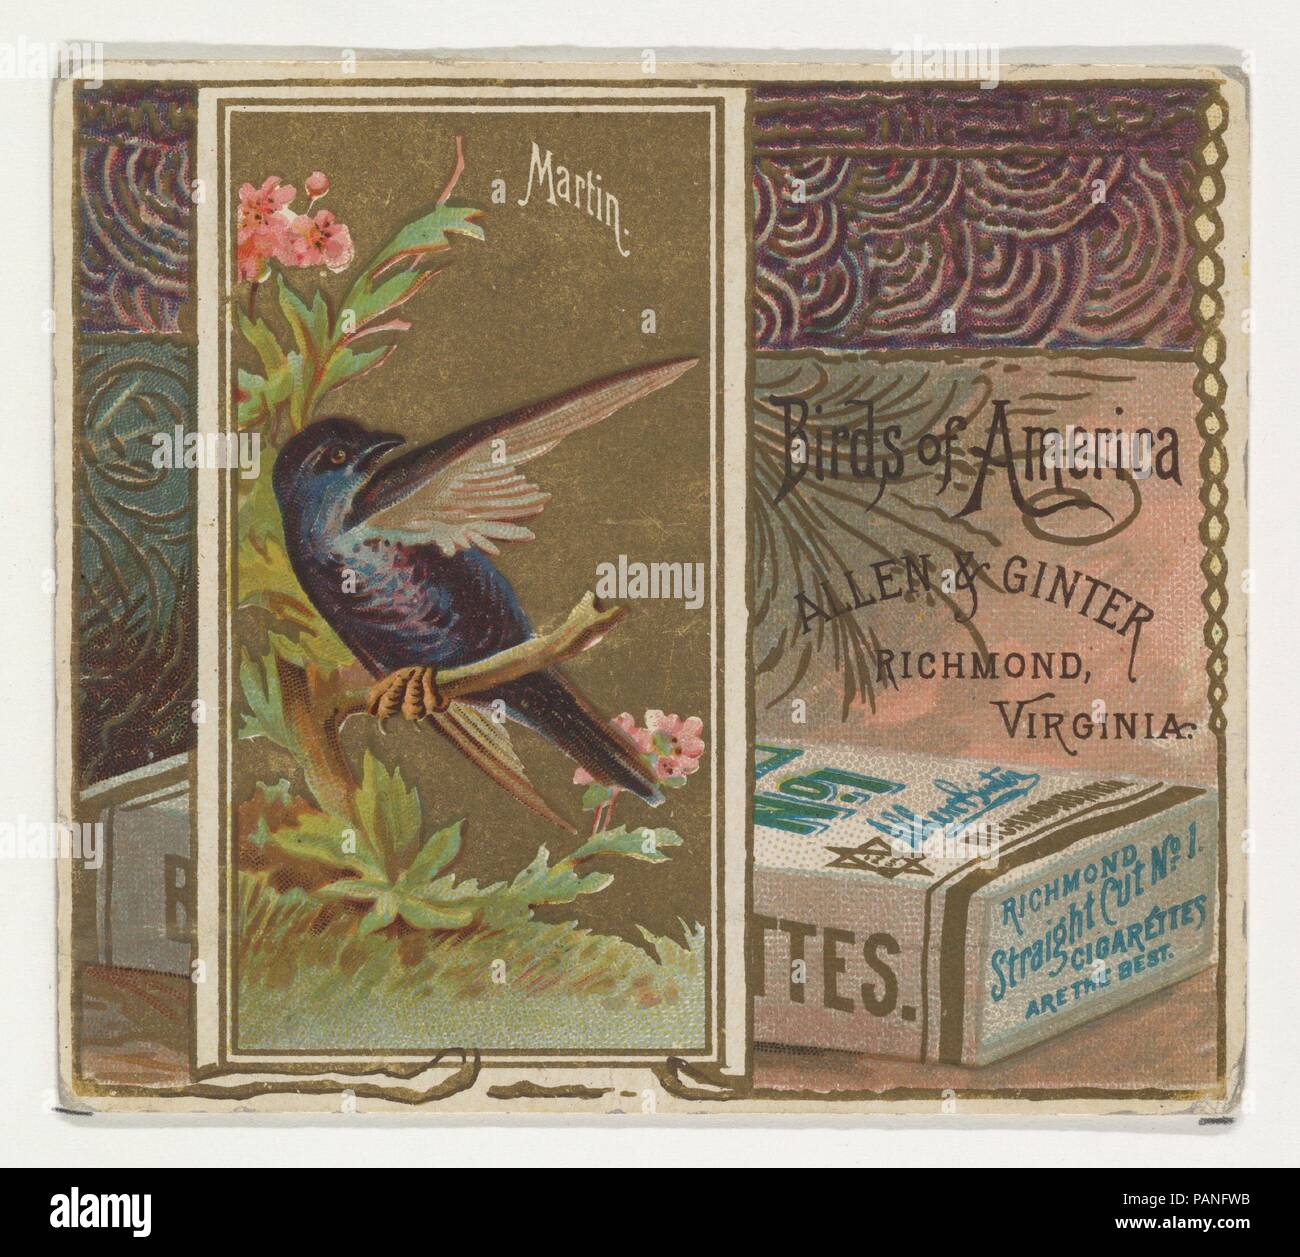 Martin da uccelli d'America serie (N37) per Allen & Ginter sigarette. Dimensioni: foglio: 2 7/8 x 3 1/4 in. (7,3 x 8,3 cm). Editore: Rilasciato da Allen & Ginter (American, Richmond, Virginia). Data: 1888. Scambio di carte dal 'Uccelli d'America' serie (N37), rilasciato nel 1888 in un set di 50 schede per promuovere Allen & Ginter marca di sigarette. La serie N37 riproduce le carte dalla N4 in una dimensione più grande. Museo: Metropolitan Museum of Art di New York, Stati Uniti d'America. Foto Stock